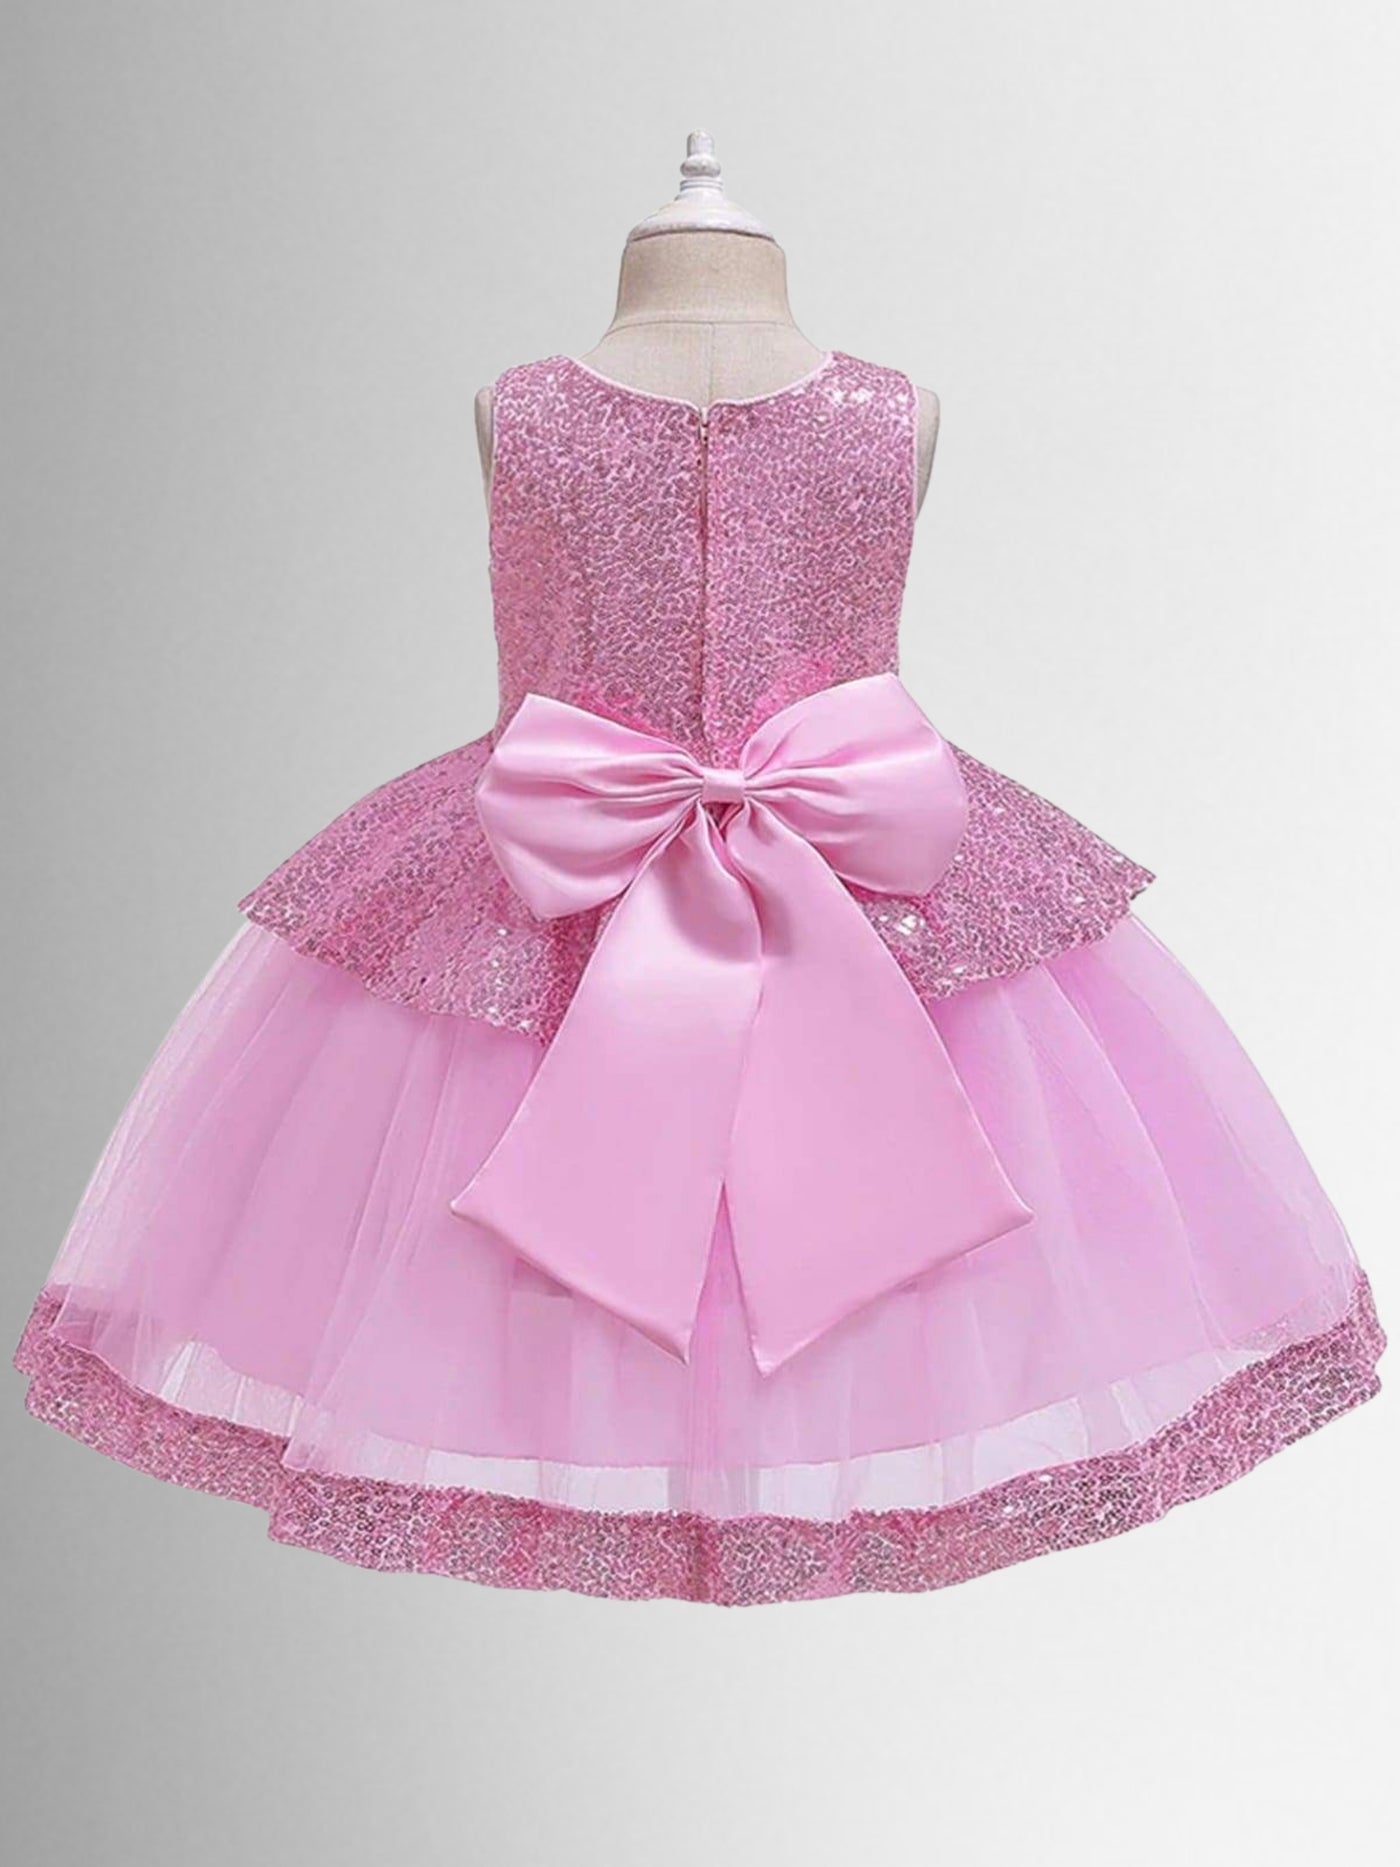 Girls Formal Easter Dress | Sleeveless Sequin Embellished Peplum Dress